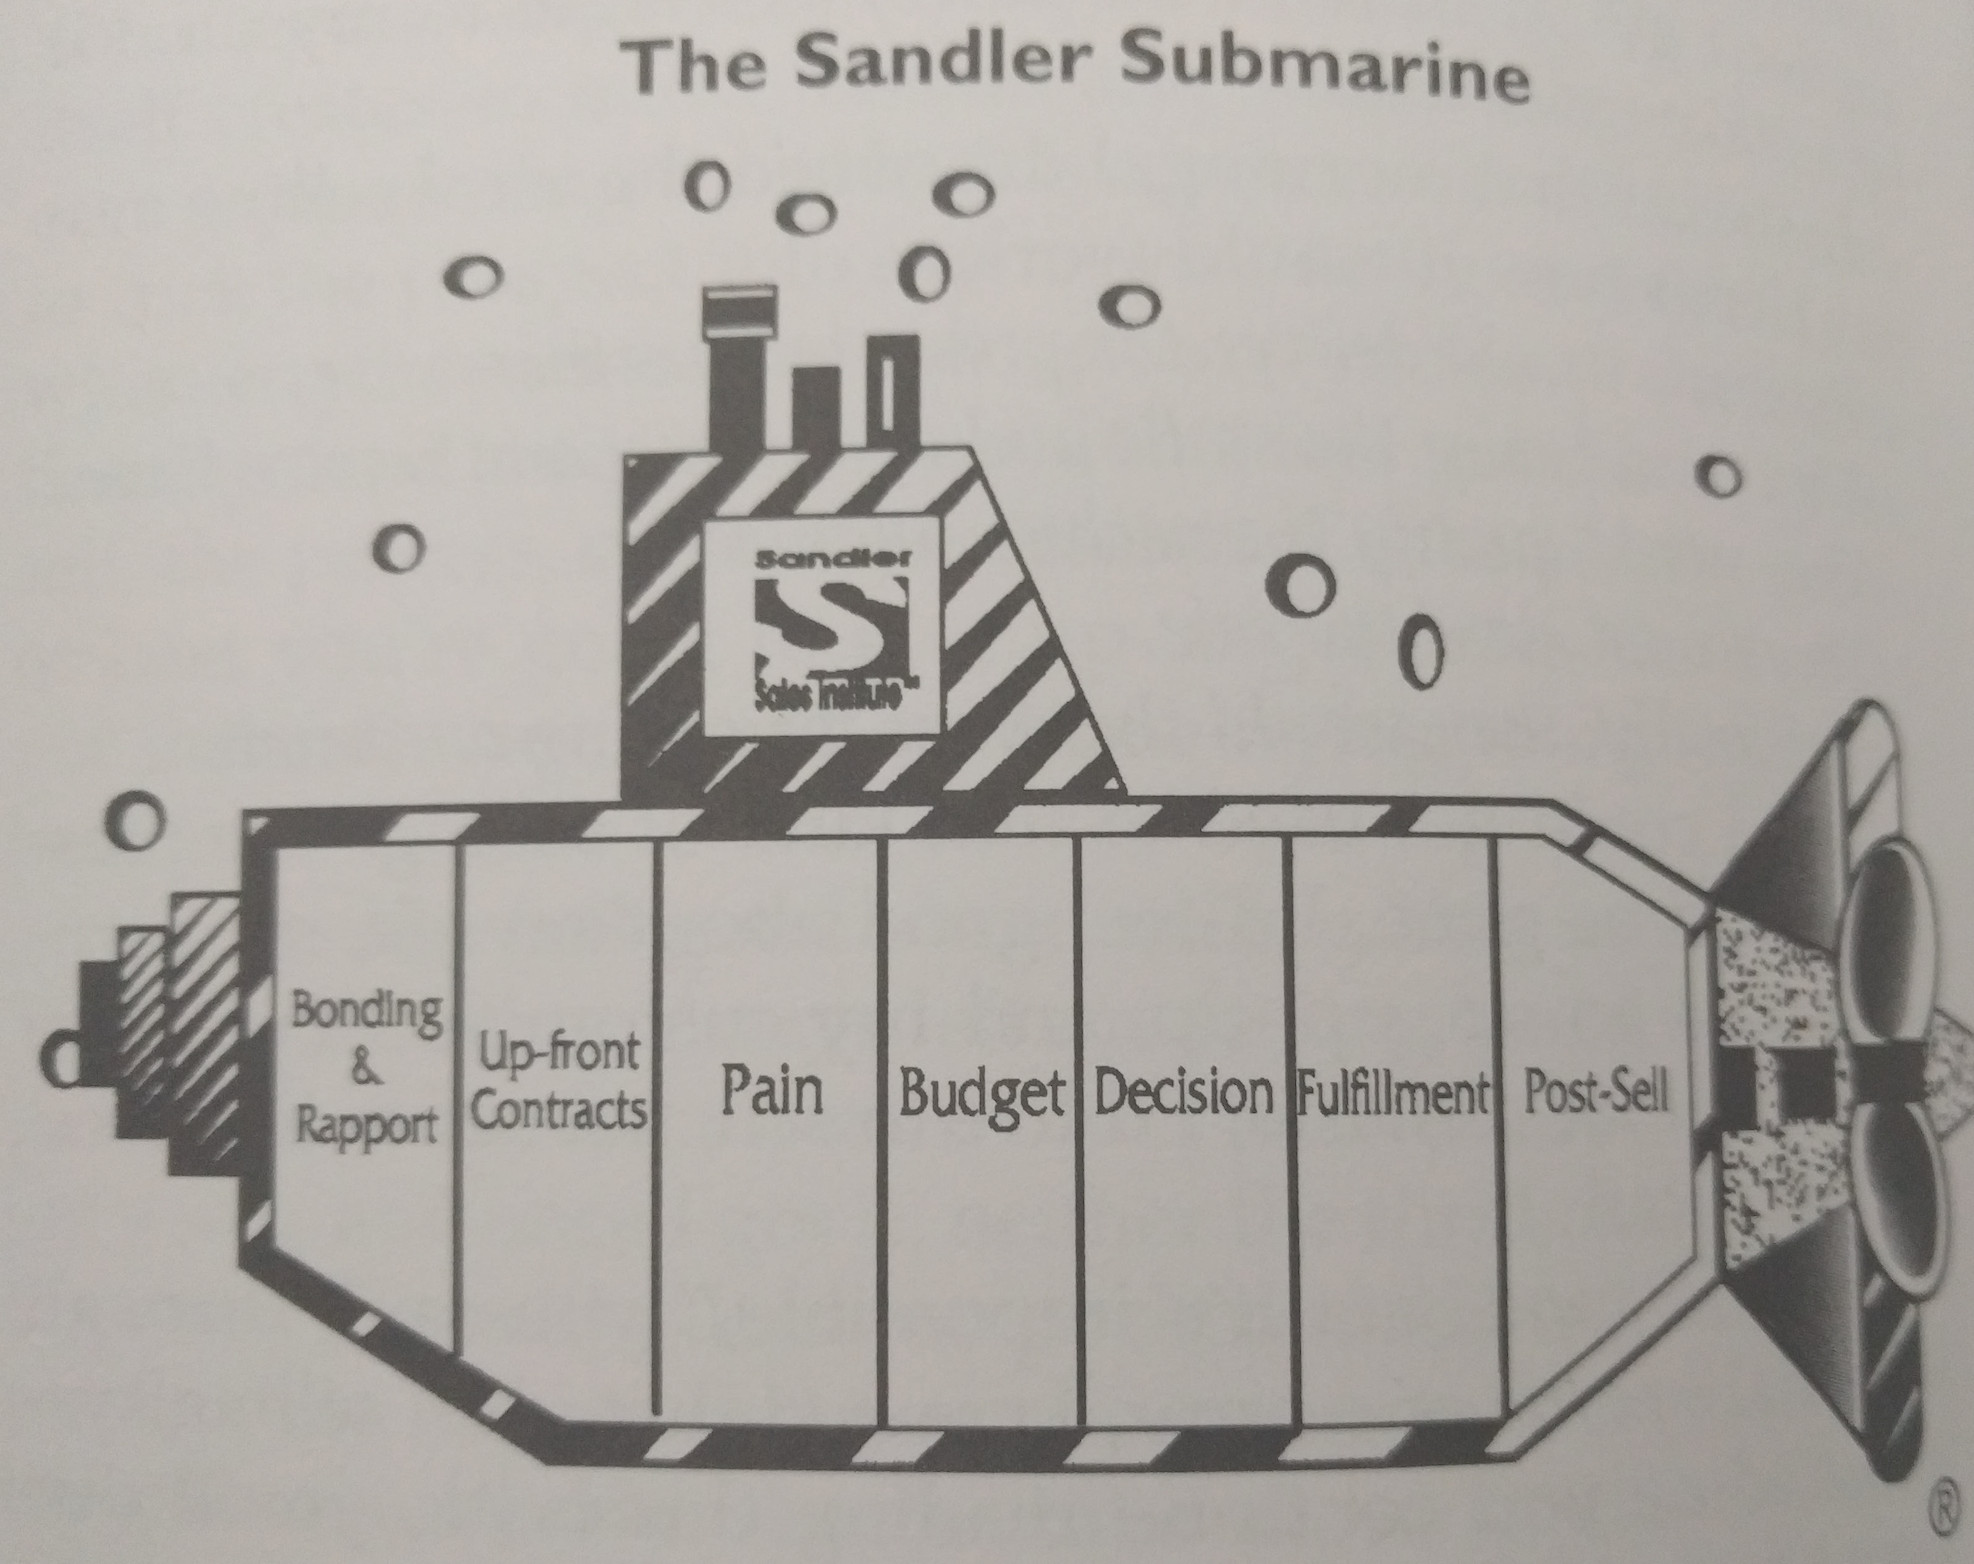 The Sandler Submarine